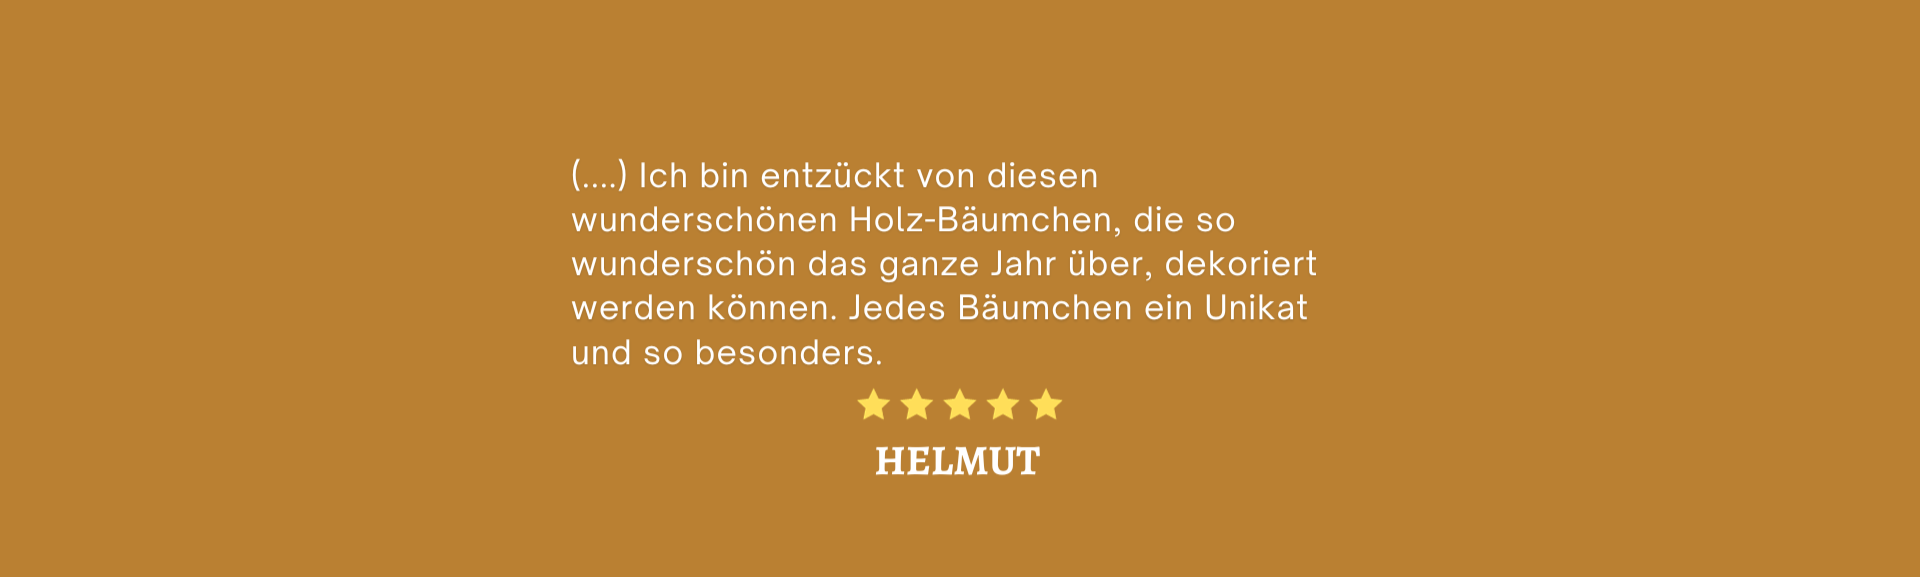 Bewertung Helmut